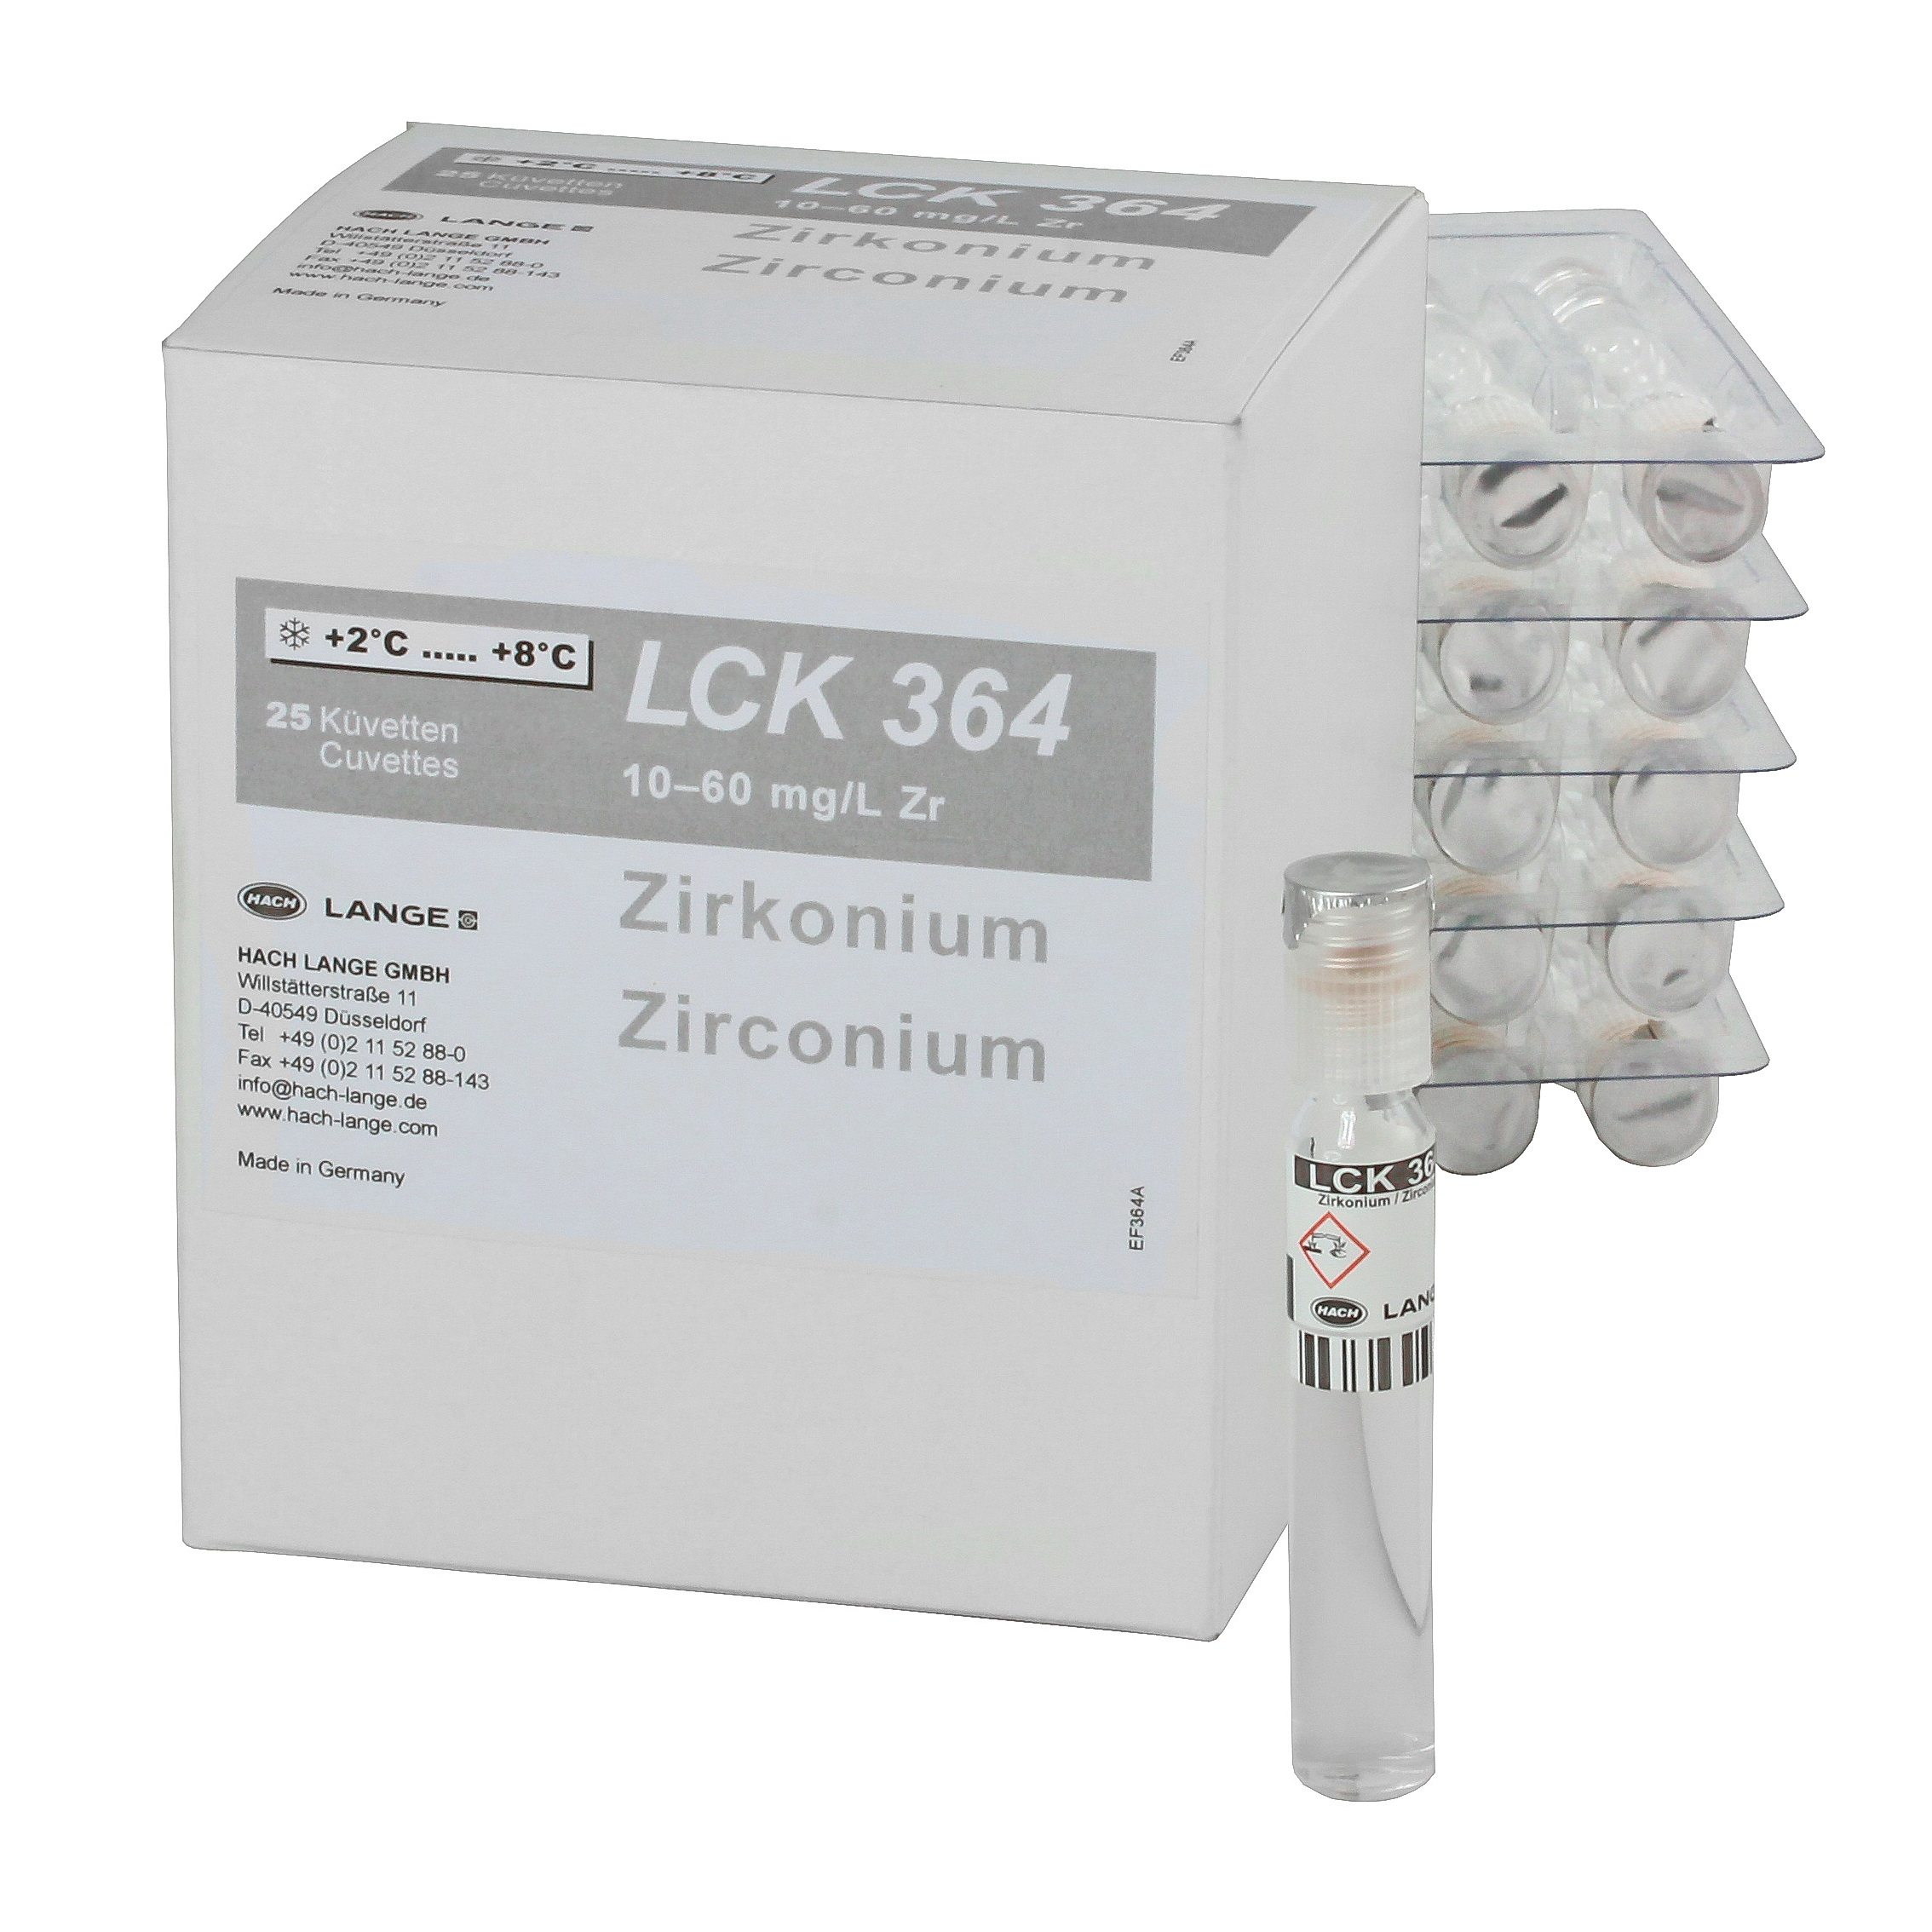 NYHET: LCK364 Zirconium